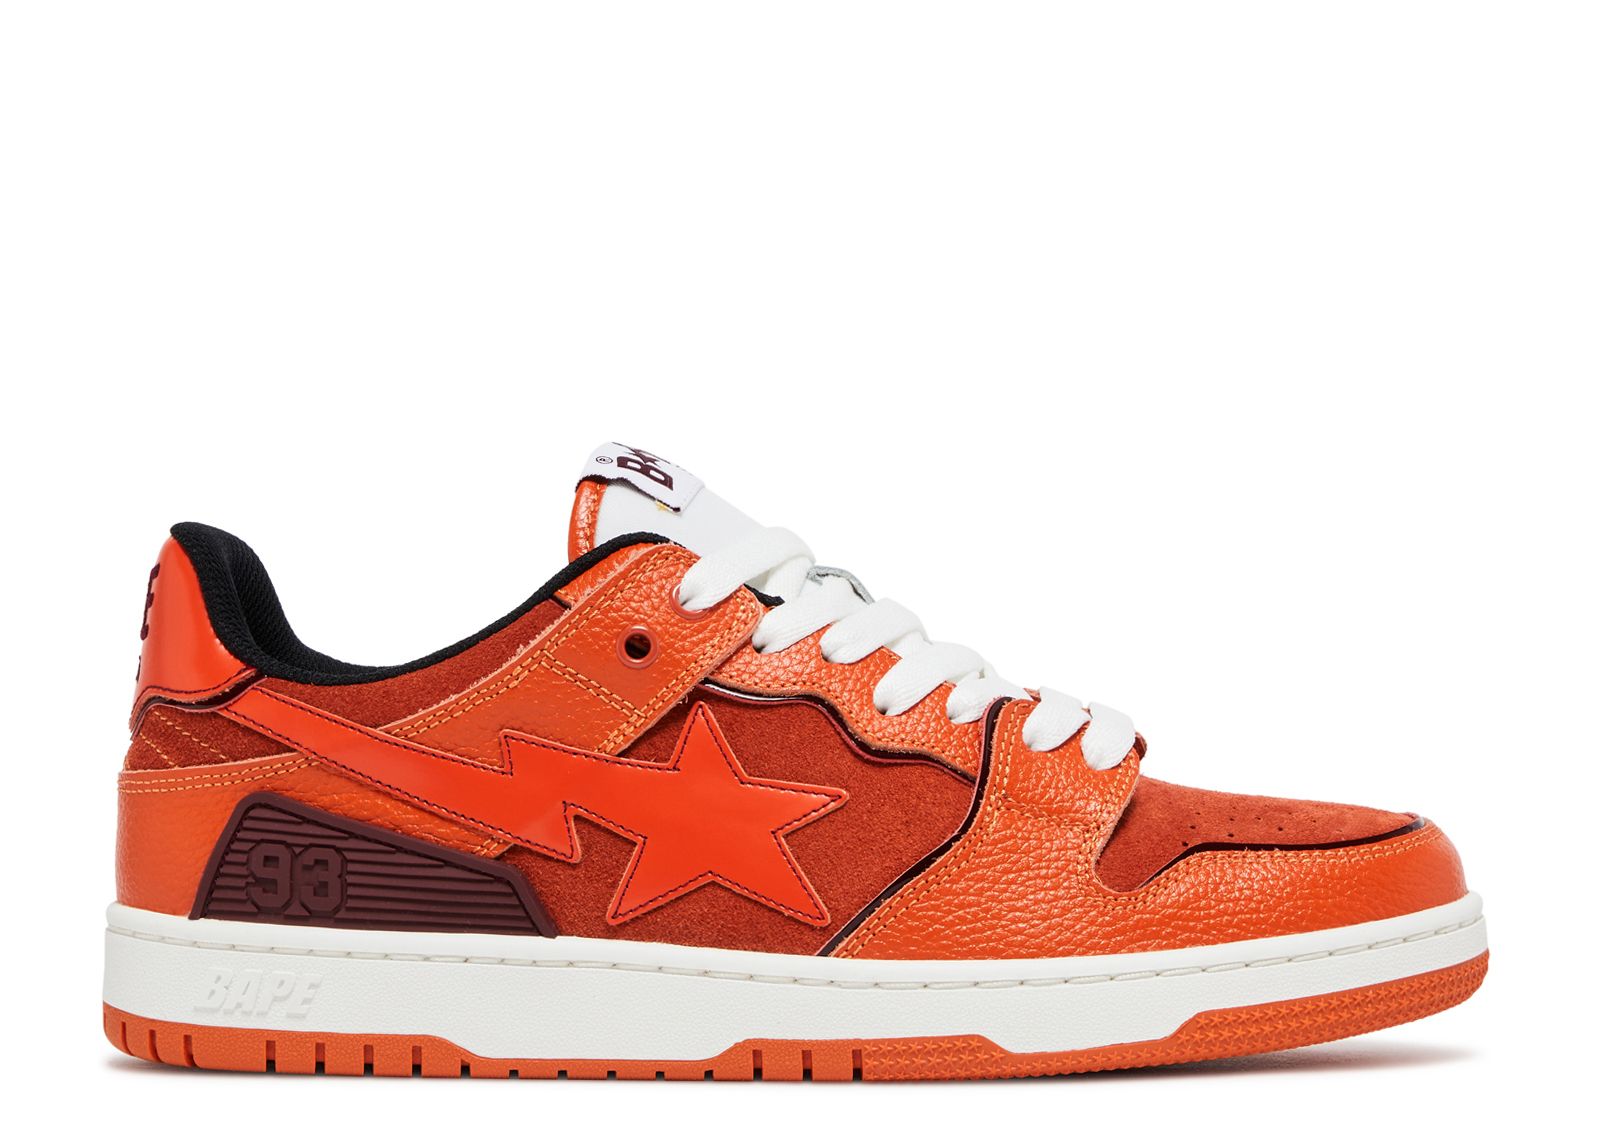 Bape - SK8 STA Sneakers (Orange/Pink/Tan) – eluXive